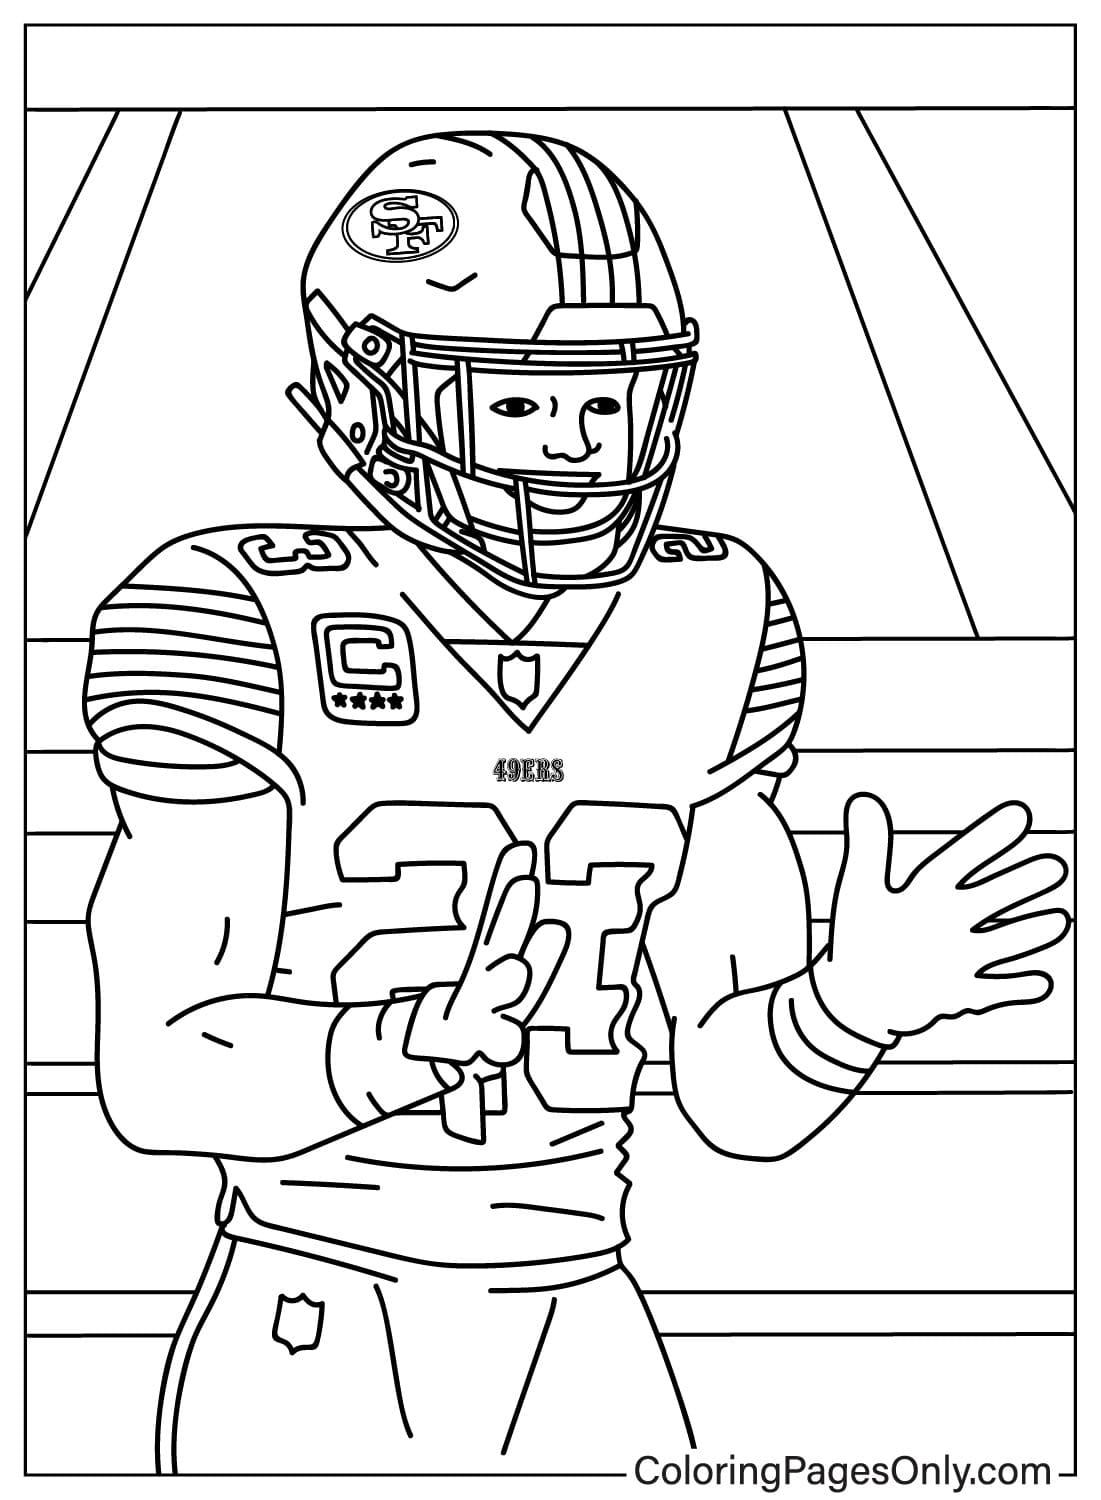 dibujos para colorear para ninos 49ers de futbol